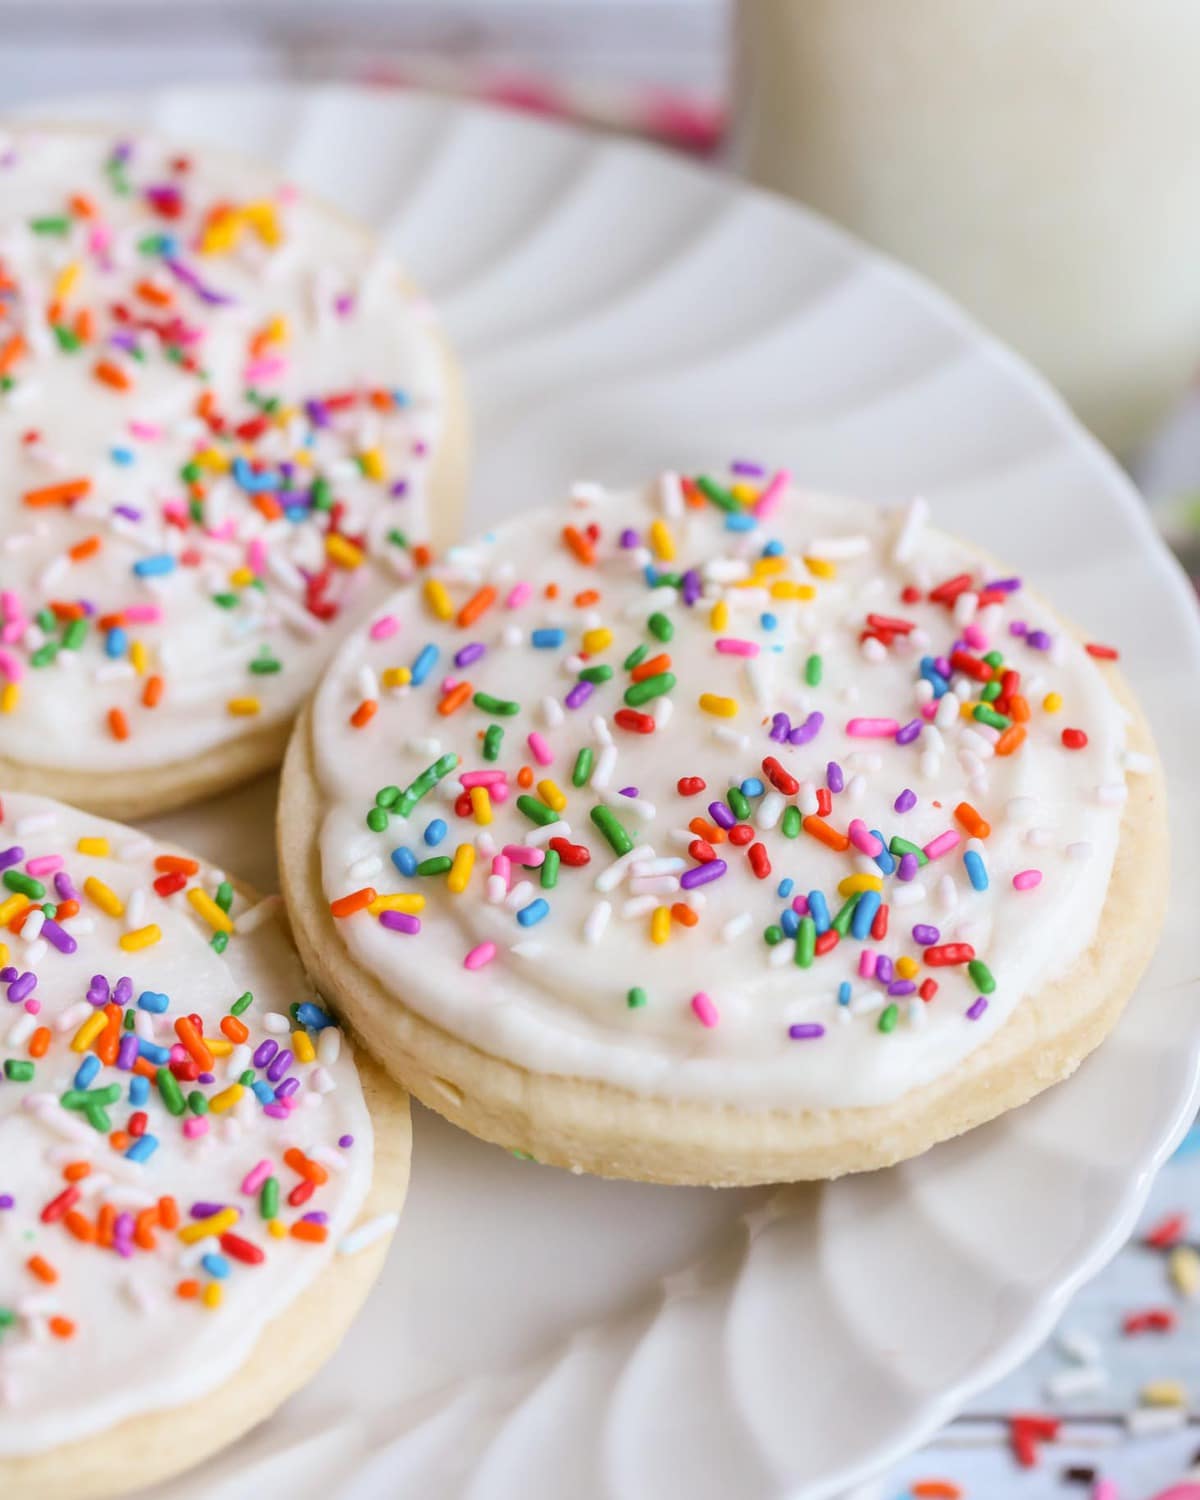 Sugar cookies with frosting and sprinkles